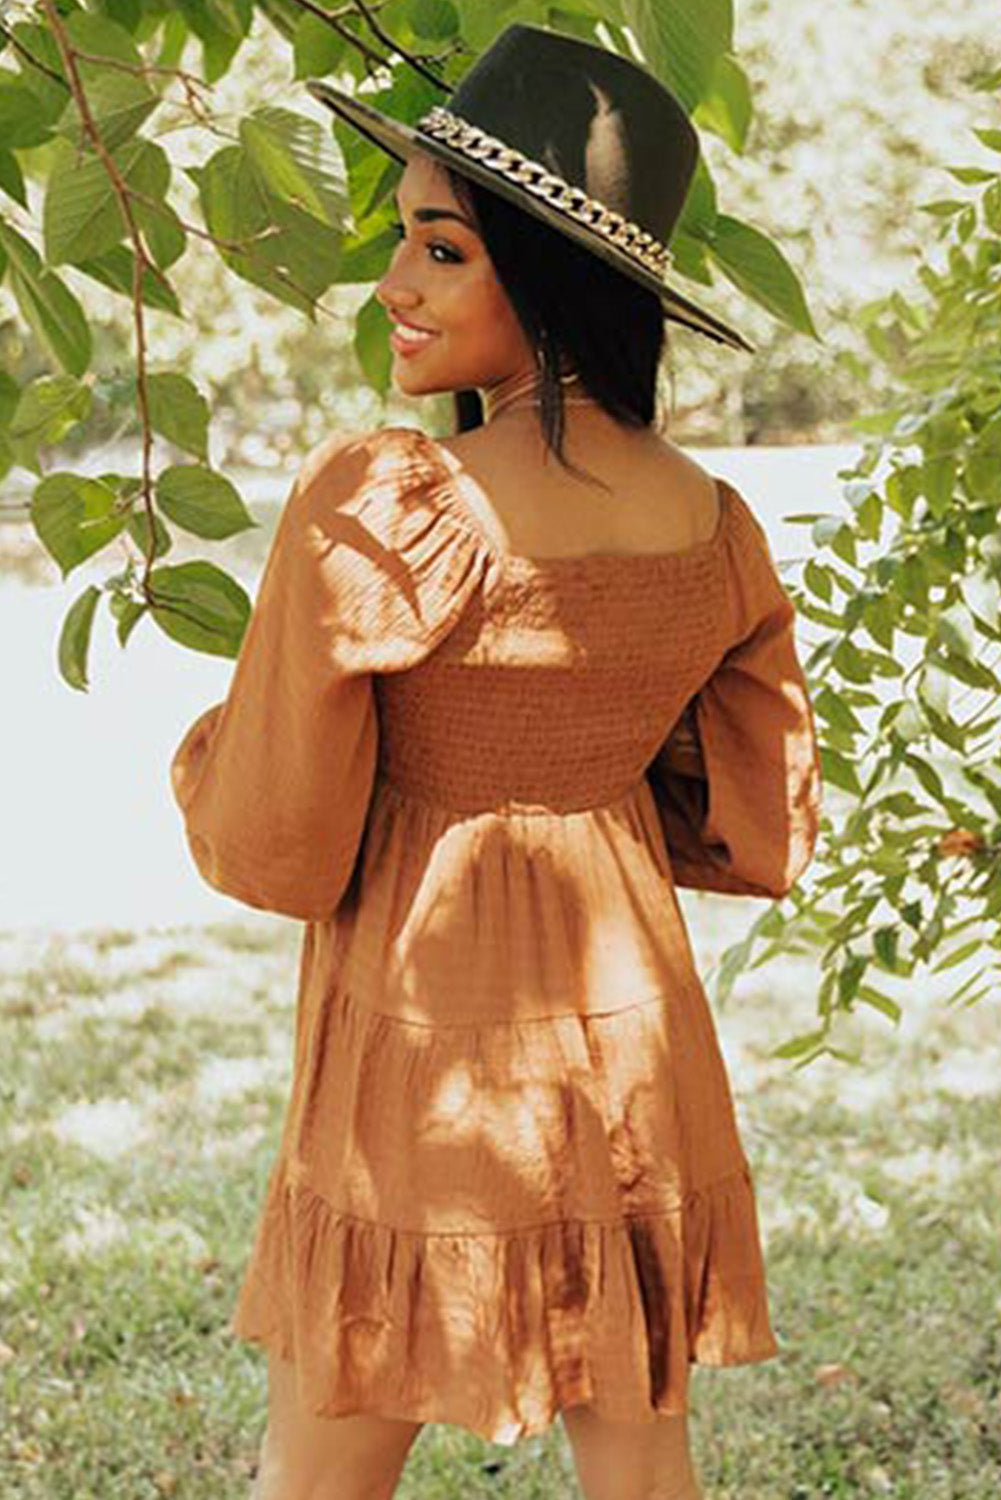 Brown Long Sleeve Smocked Tiered Boho Dress